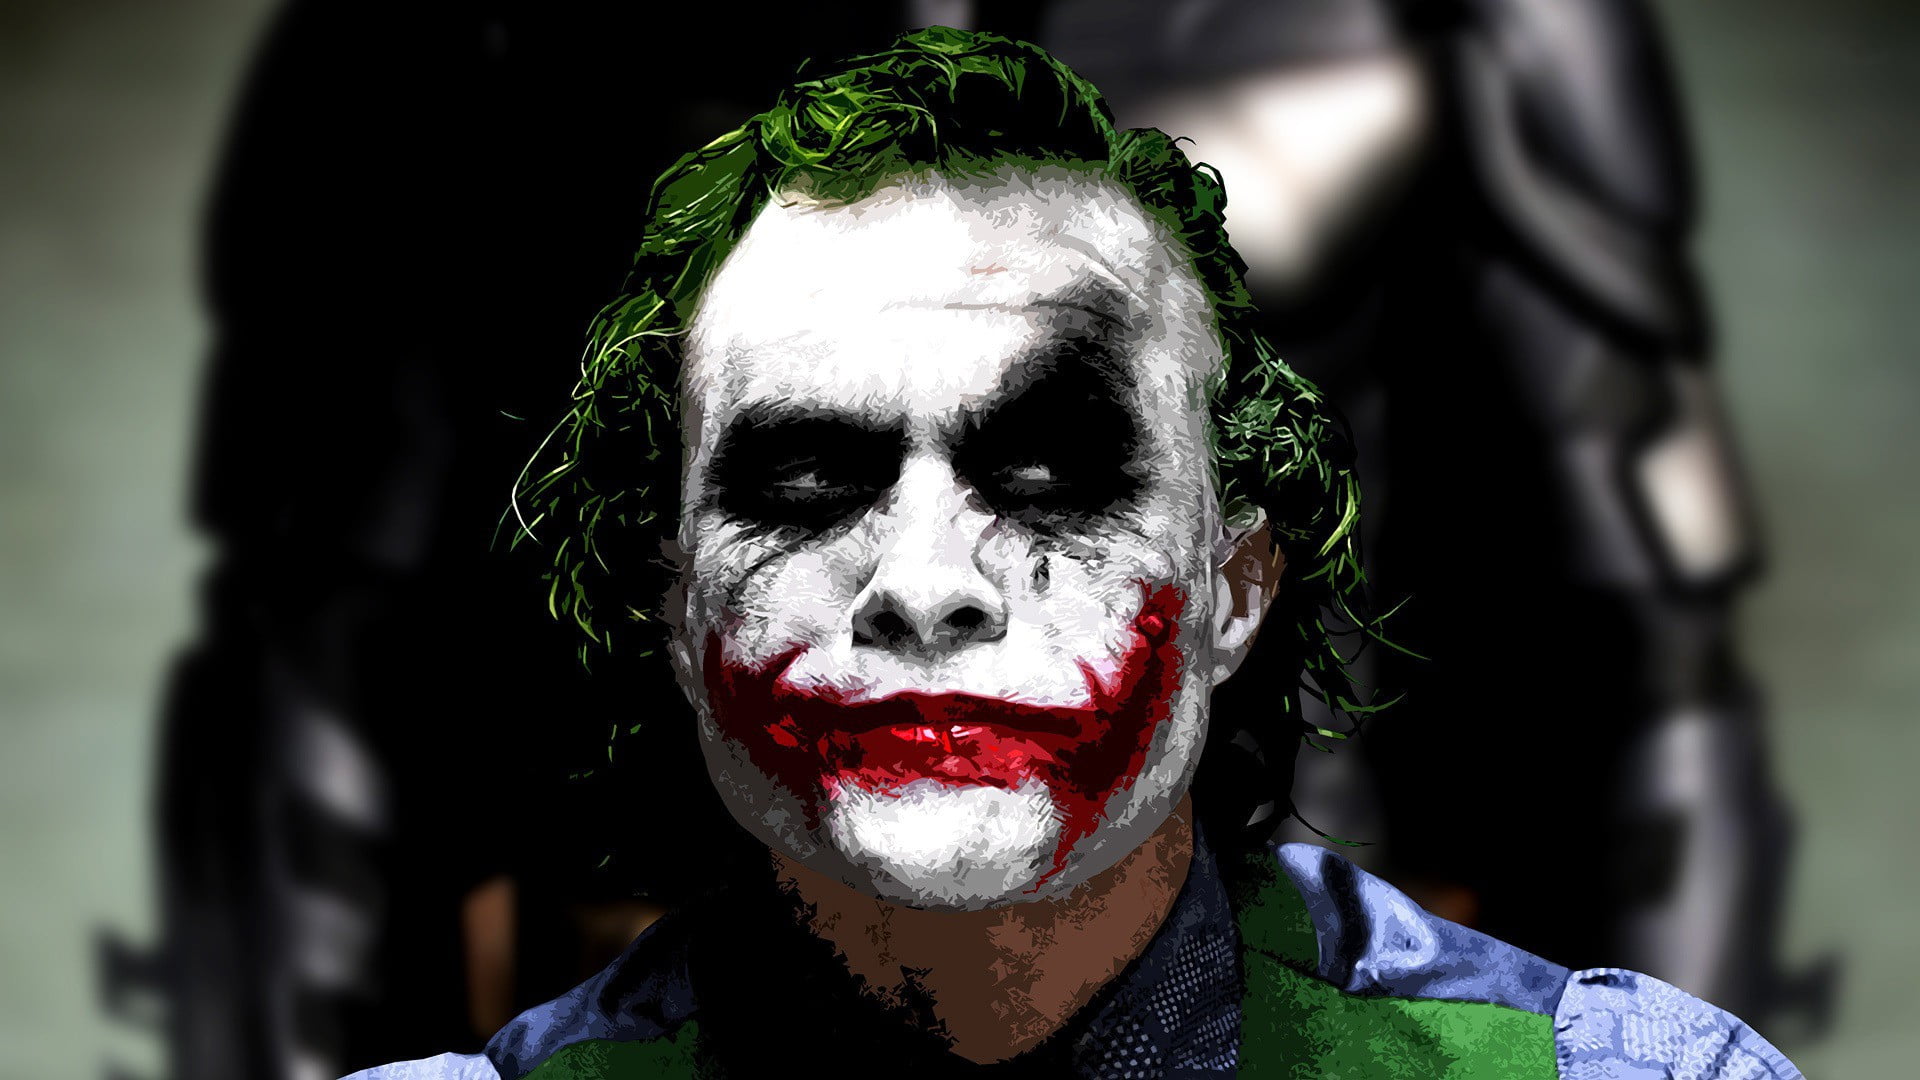 The Dark Knight Joker, Heath Ledger, movies, MessenjahMatt, portrait